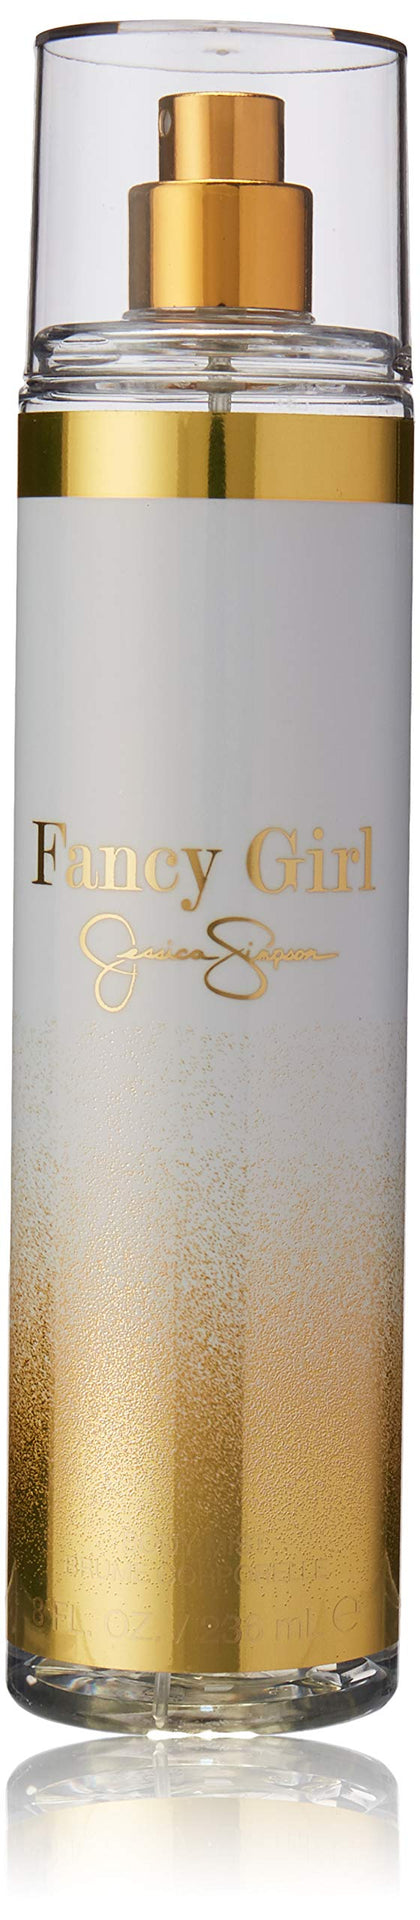 Jessica Simpson Fancy Girl Body Mist for Women, 8 Ounce, Gold, 8 Fl Oz (Pack of 1) (I0003830)